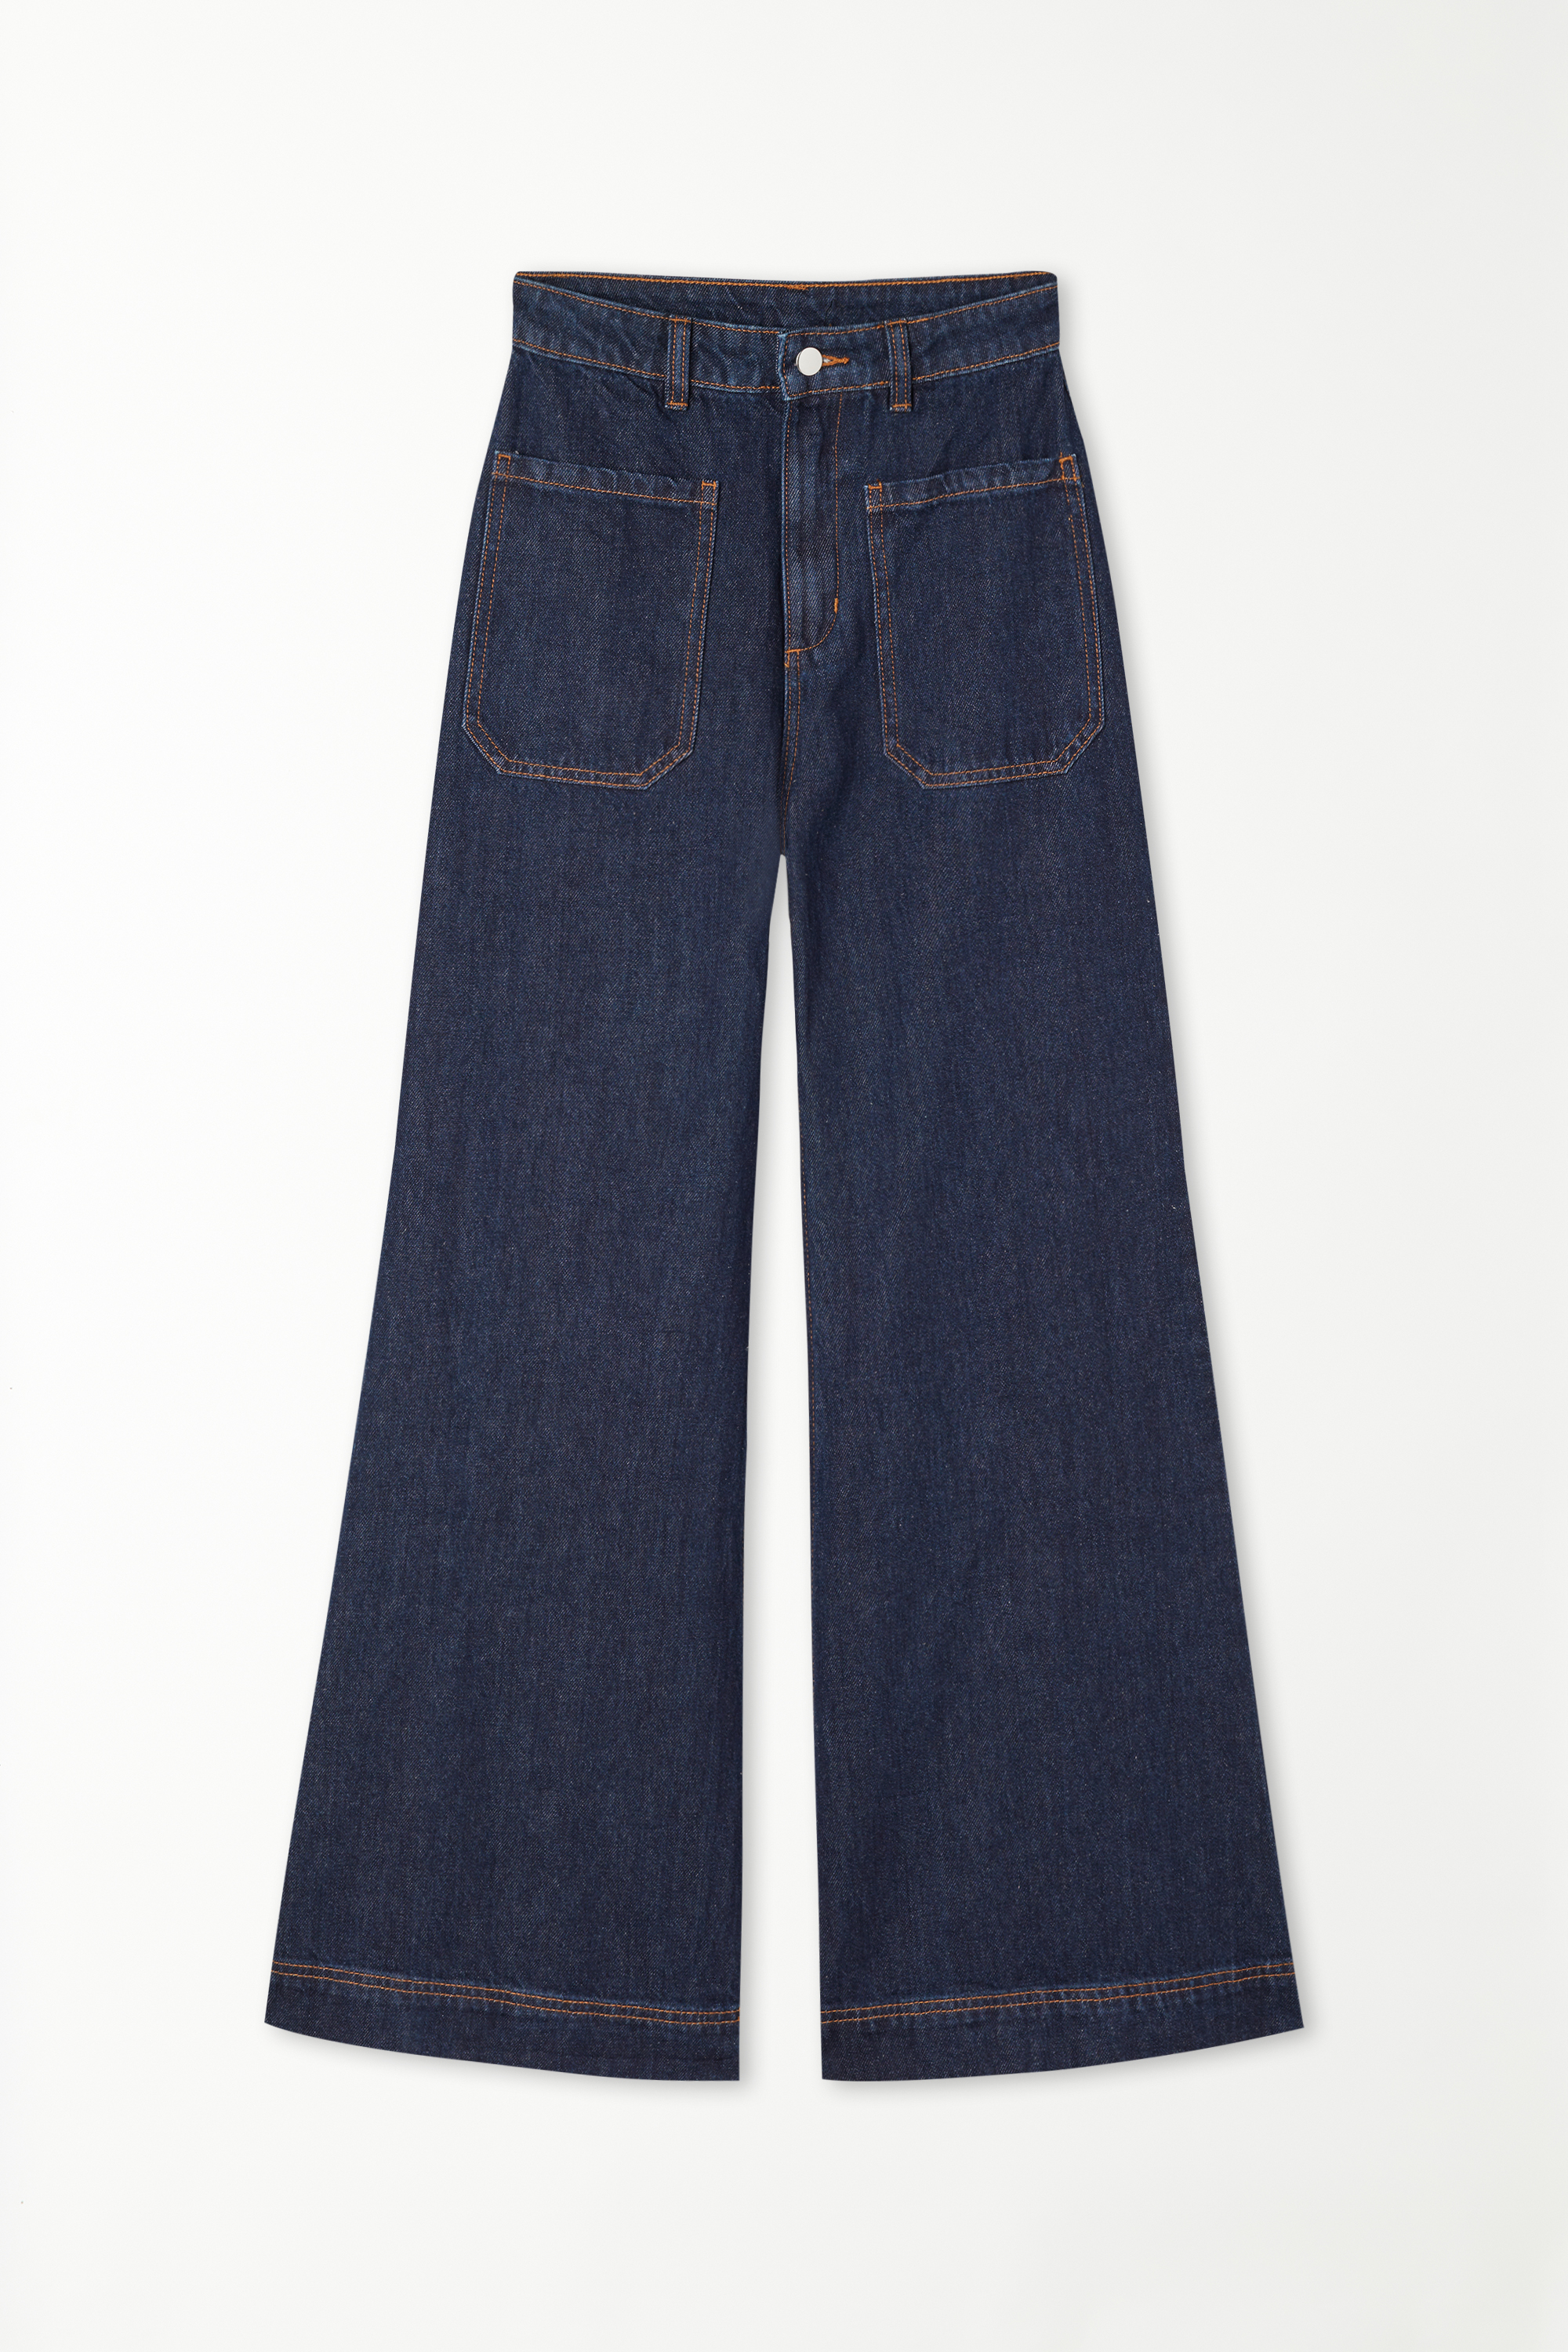 Lange, gerade Jeans aus Délavé-Denim mit hohem Bund